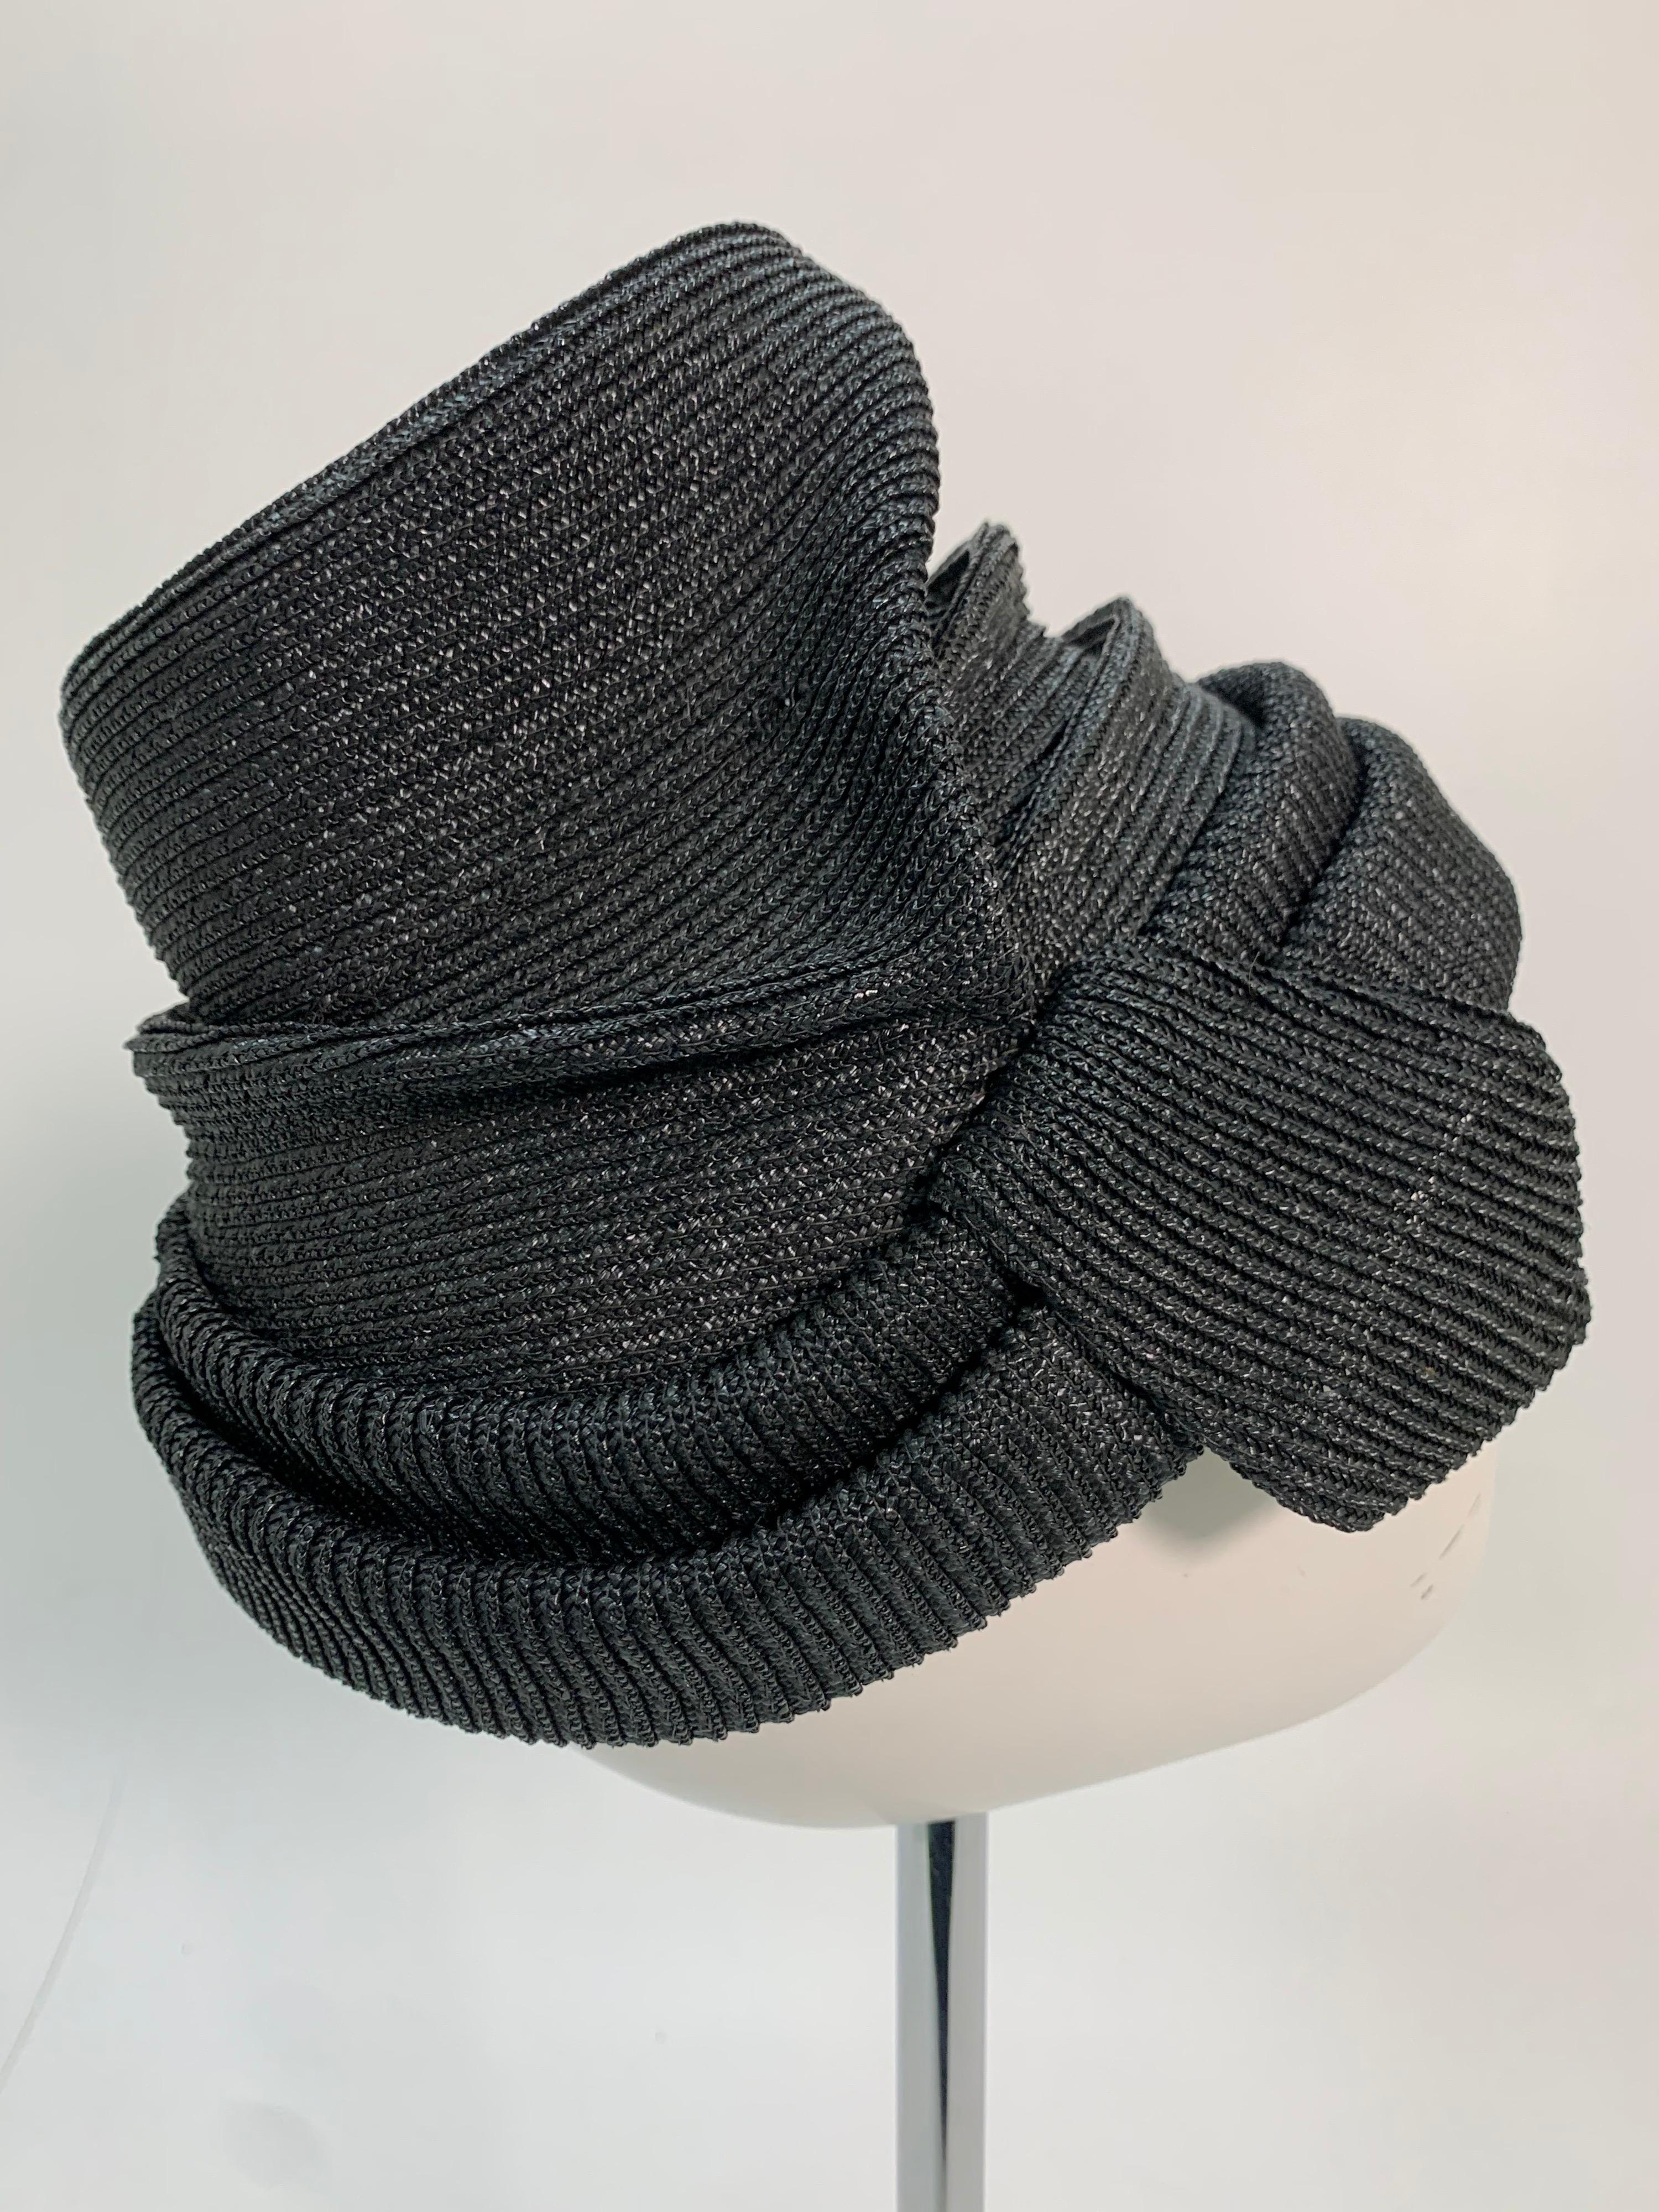 1950 John Frederics Black Straw Avant Guarde Sculpted Hat  For Sale 1